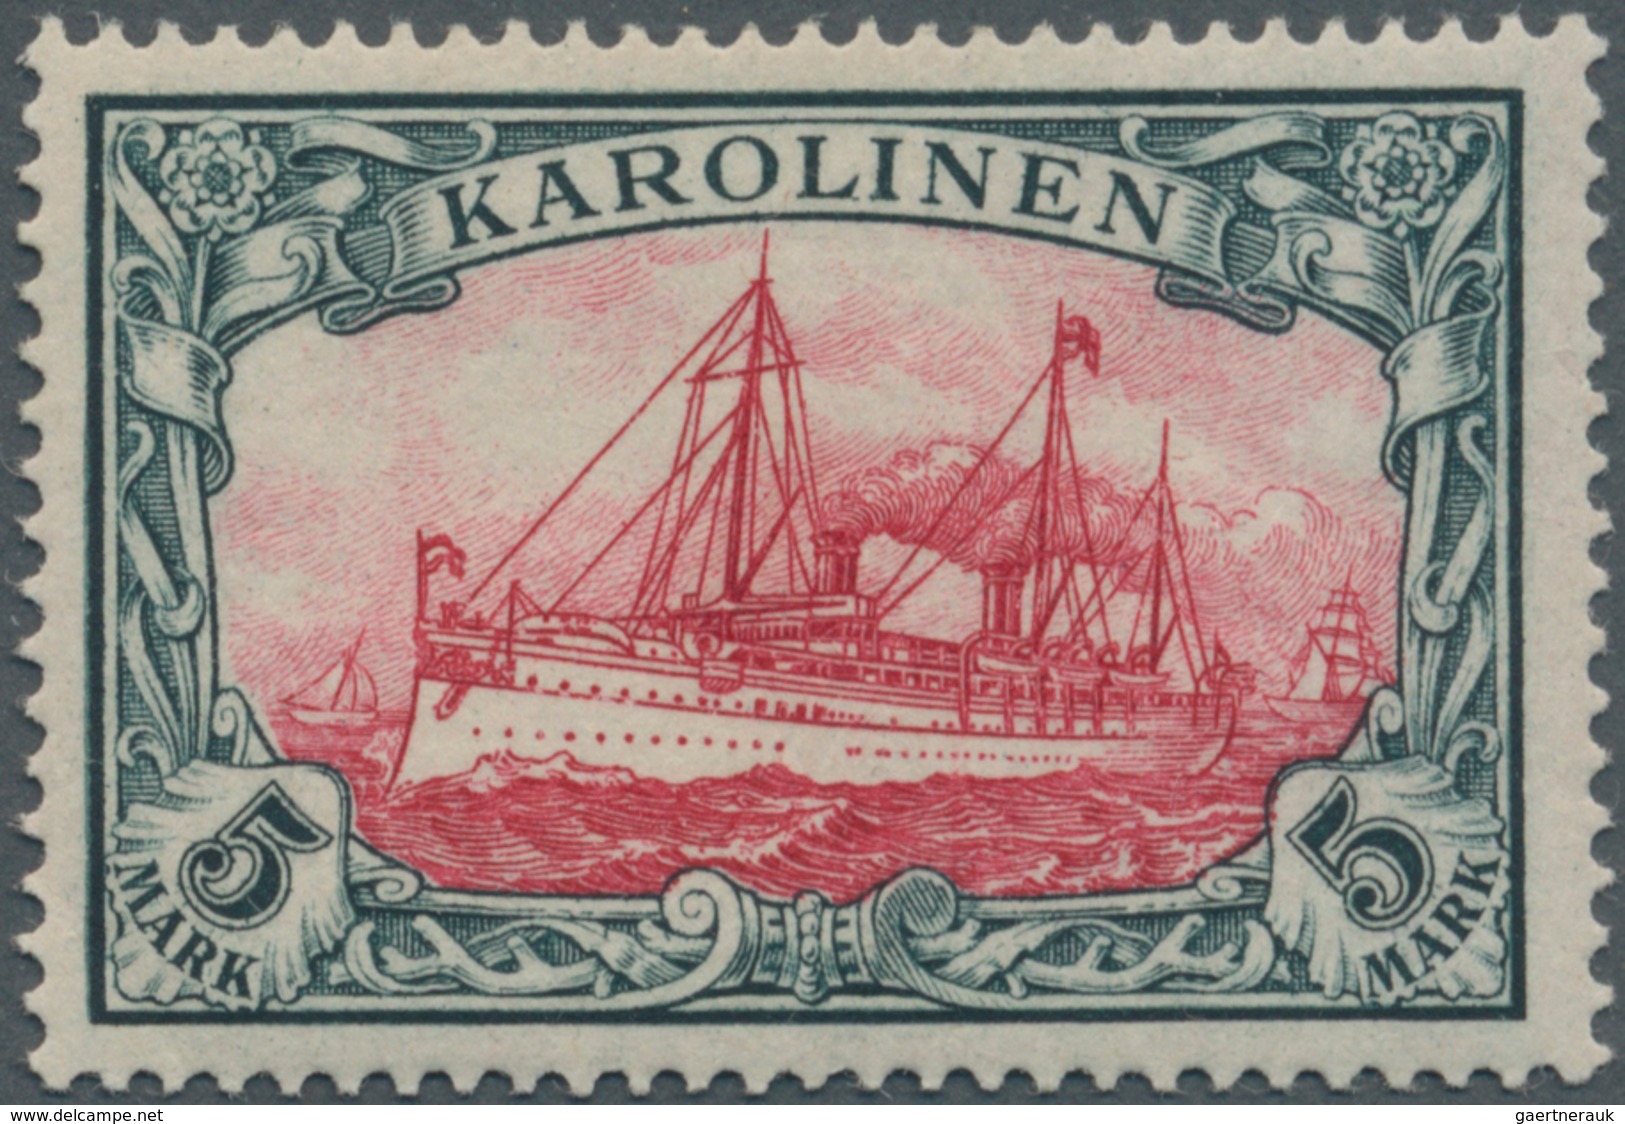 Deutsche Kolonien - Karolinen: 1900, 5 M Grünschwarz/dunkelkarmin Kaiseryacht, O.Wz., Postfrisch Pra - Caroline Islands